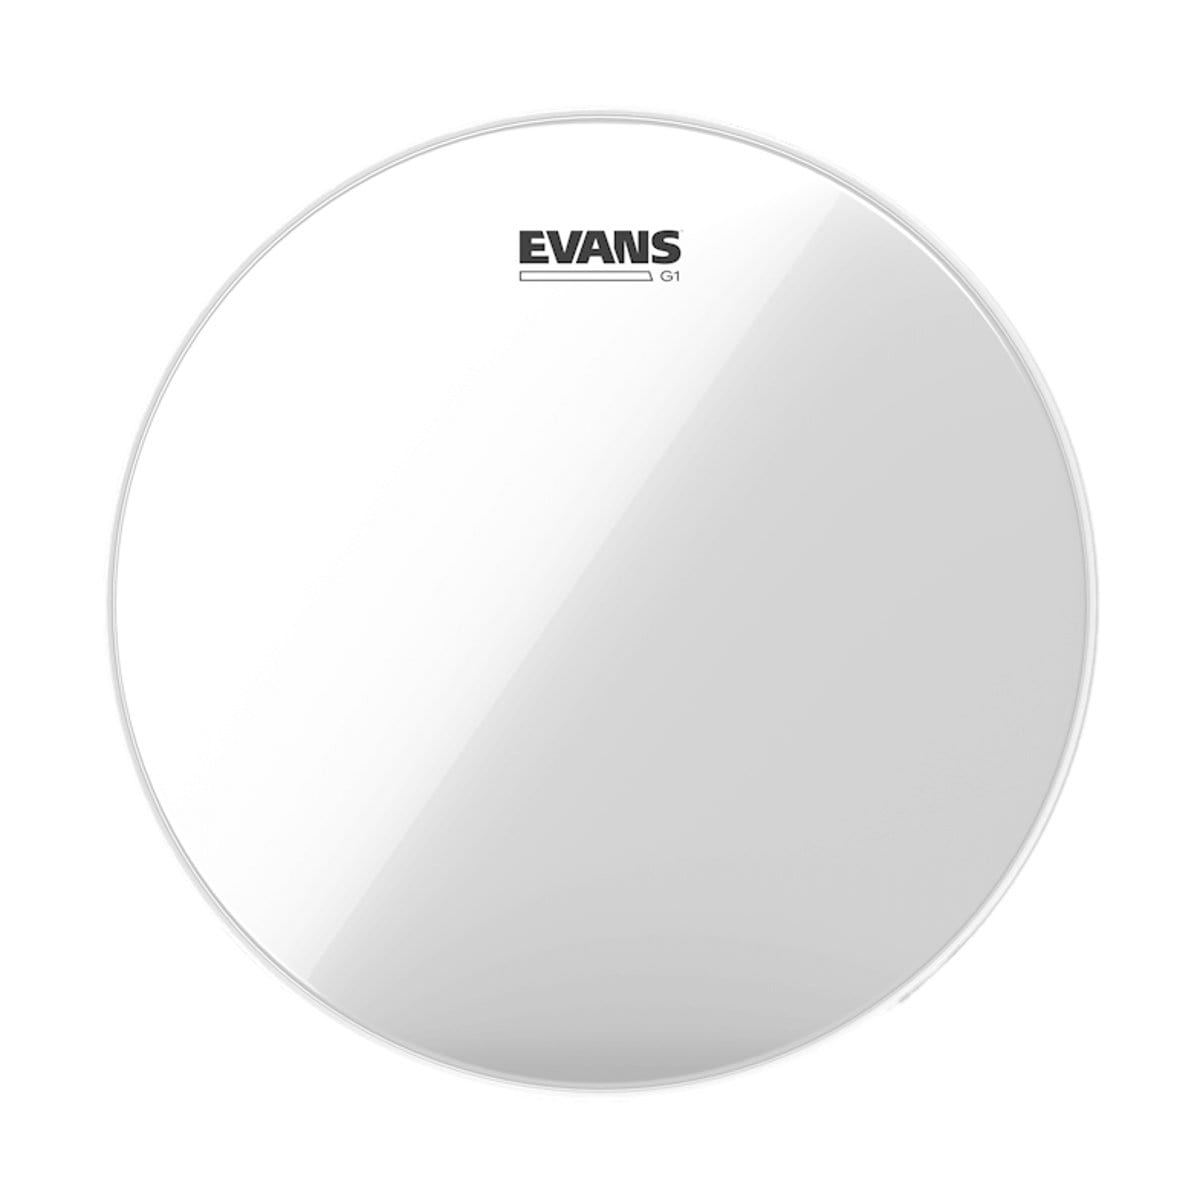 Evans Percussion Evans 16 Inch Tom Drum Head G1 Clear TT16G1 - Byron Music